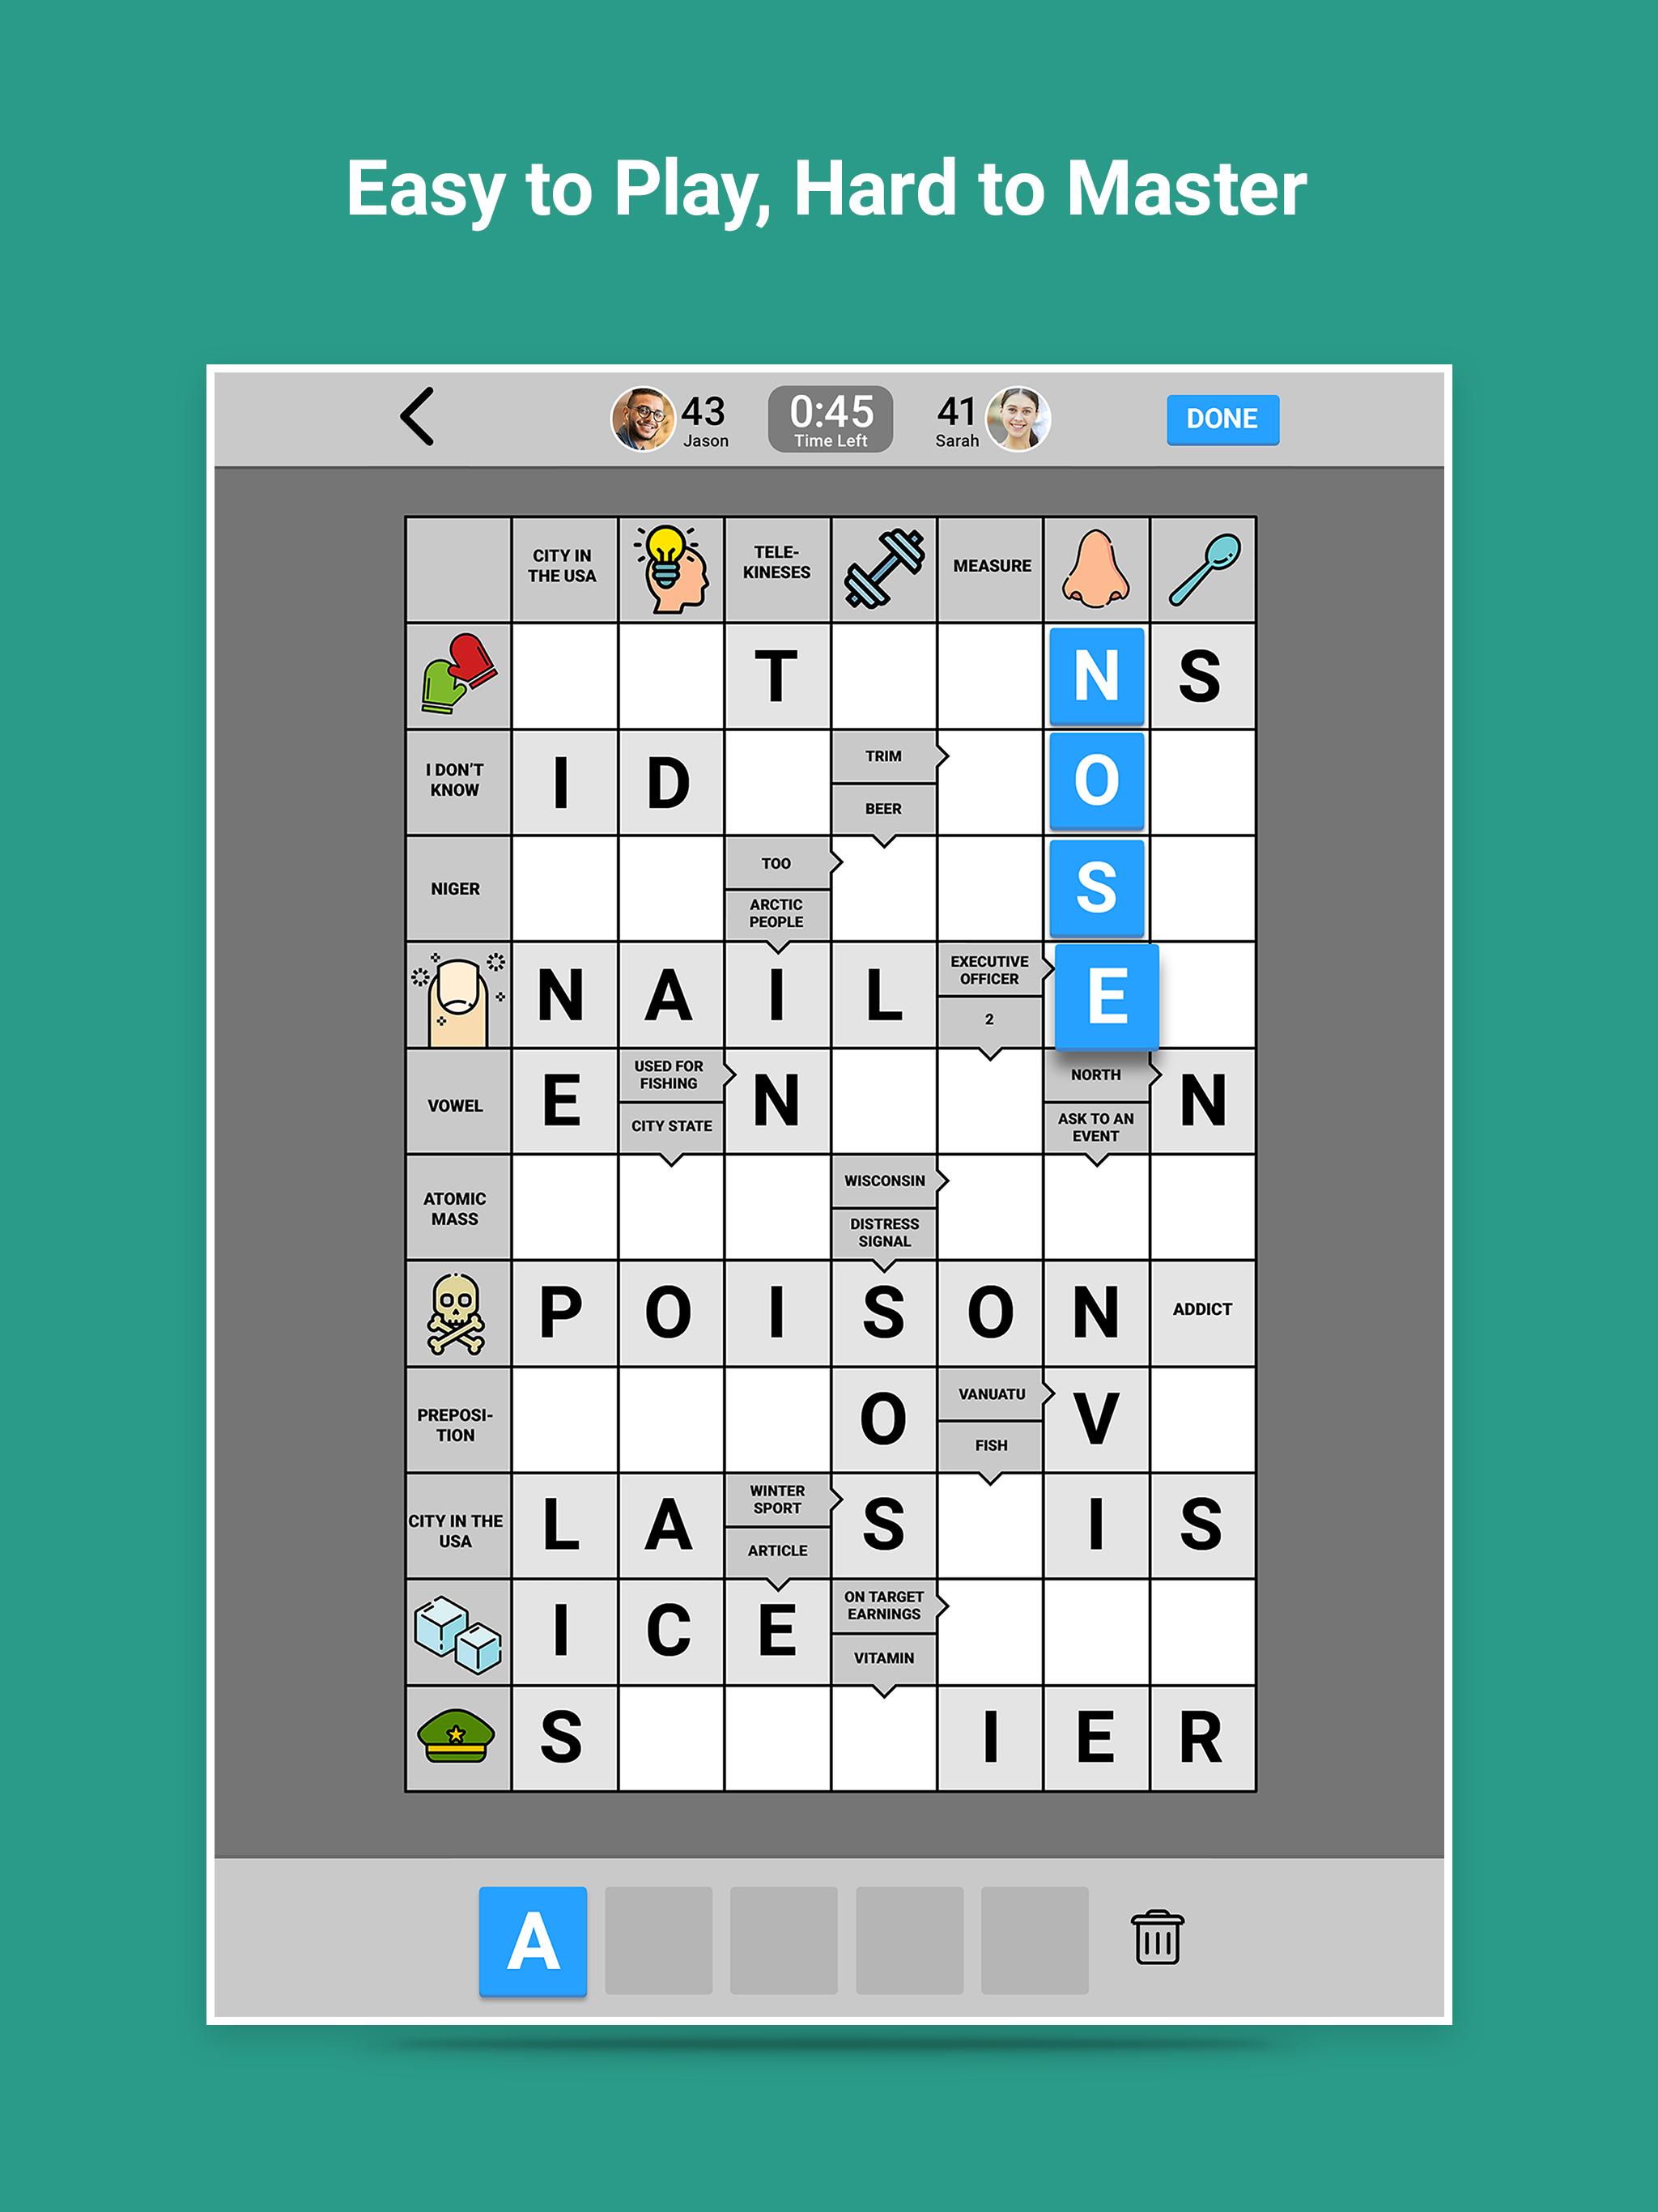 Pictawords Crossword Puzzle 1.6.7578 Screenshot 12